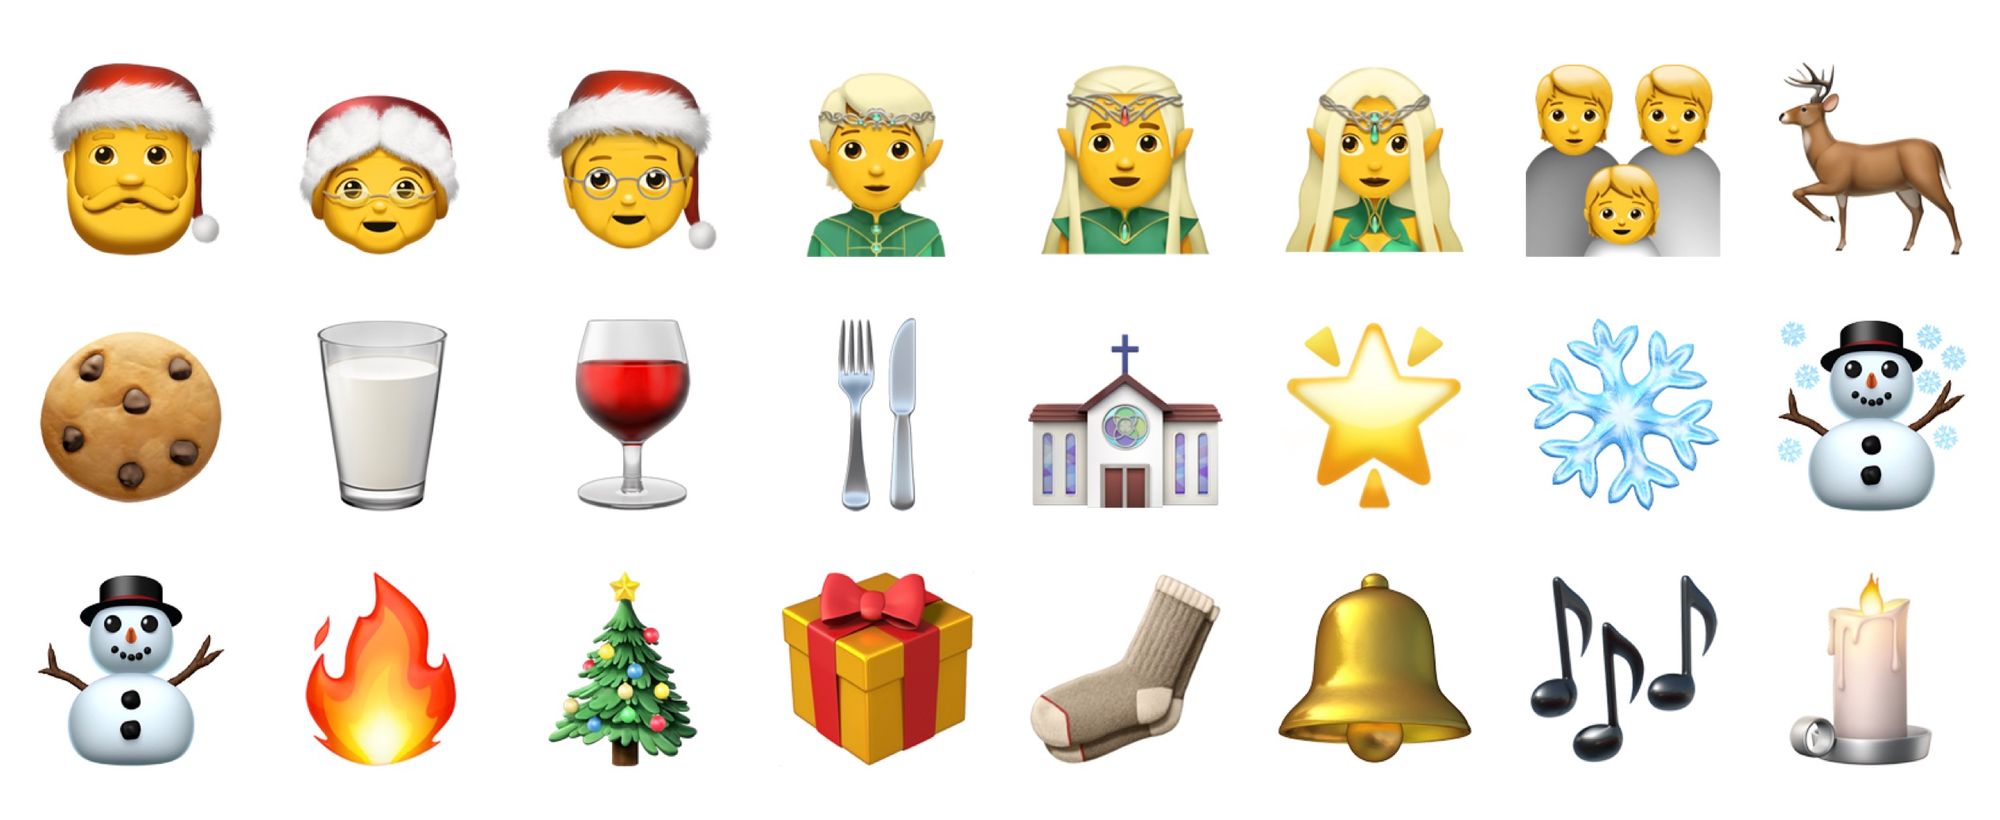 Every Christmas Emoji